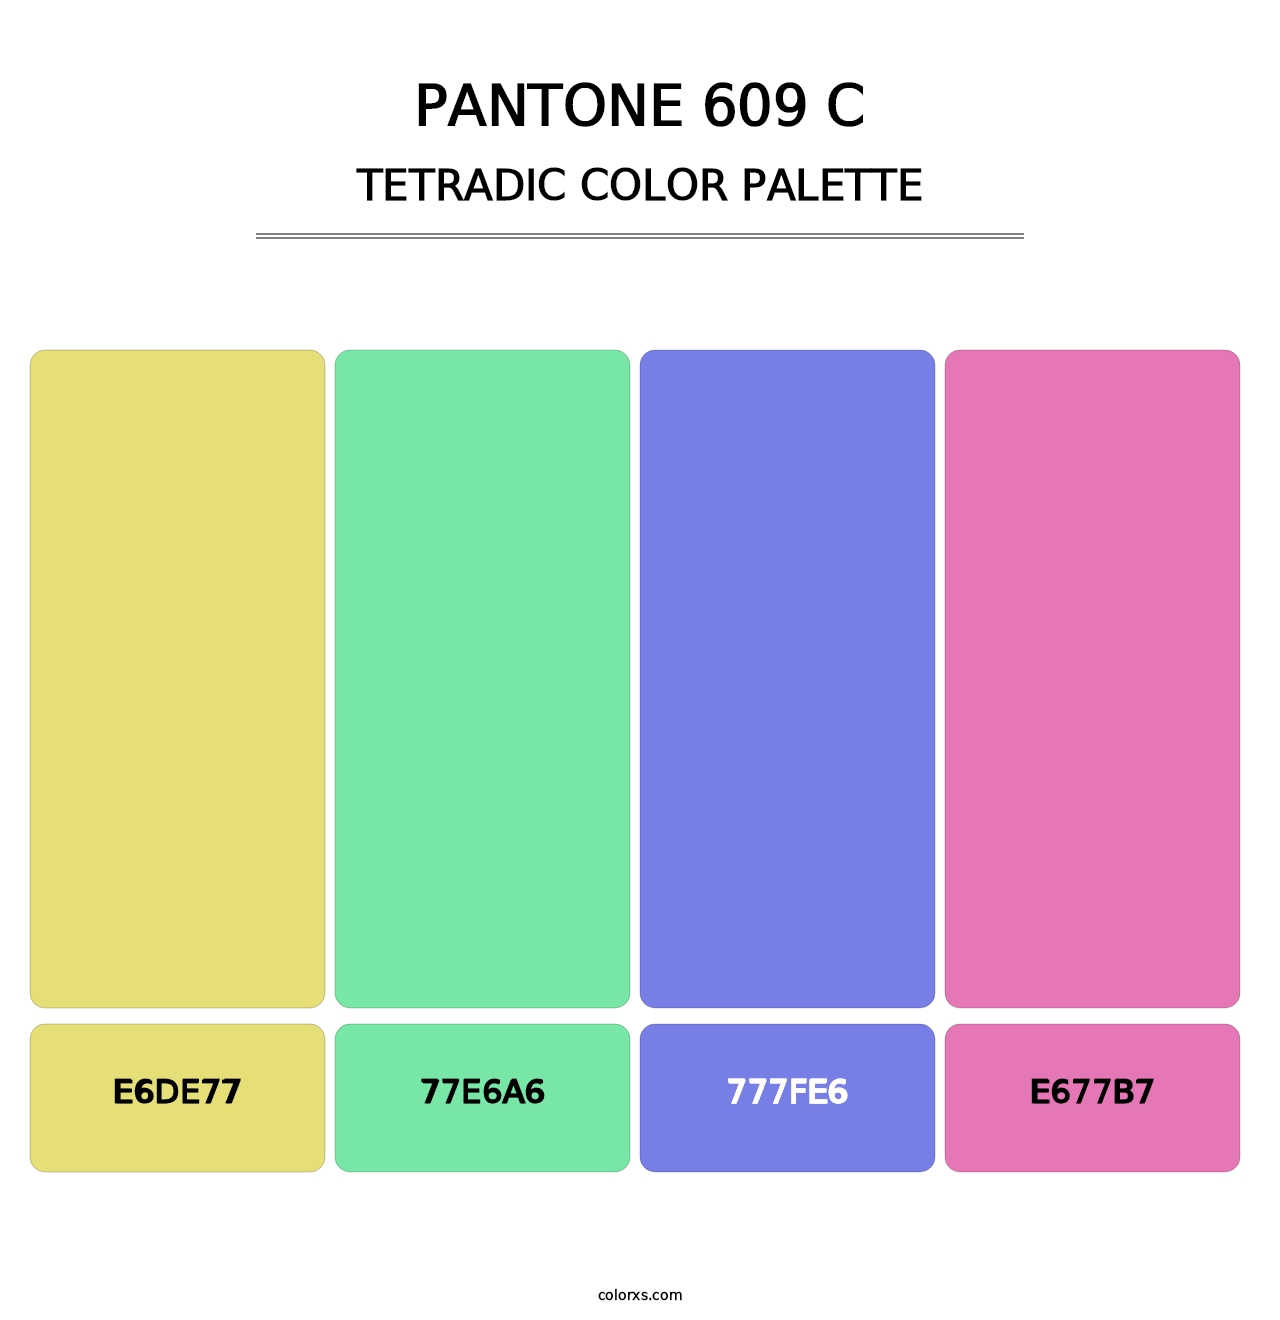 PANTONE 609 C - Tetradic Color Palette